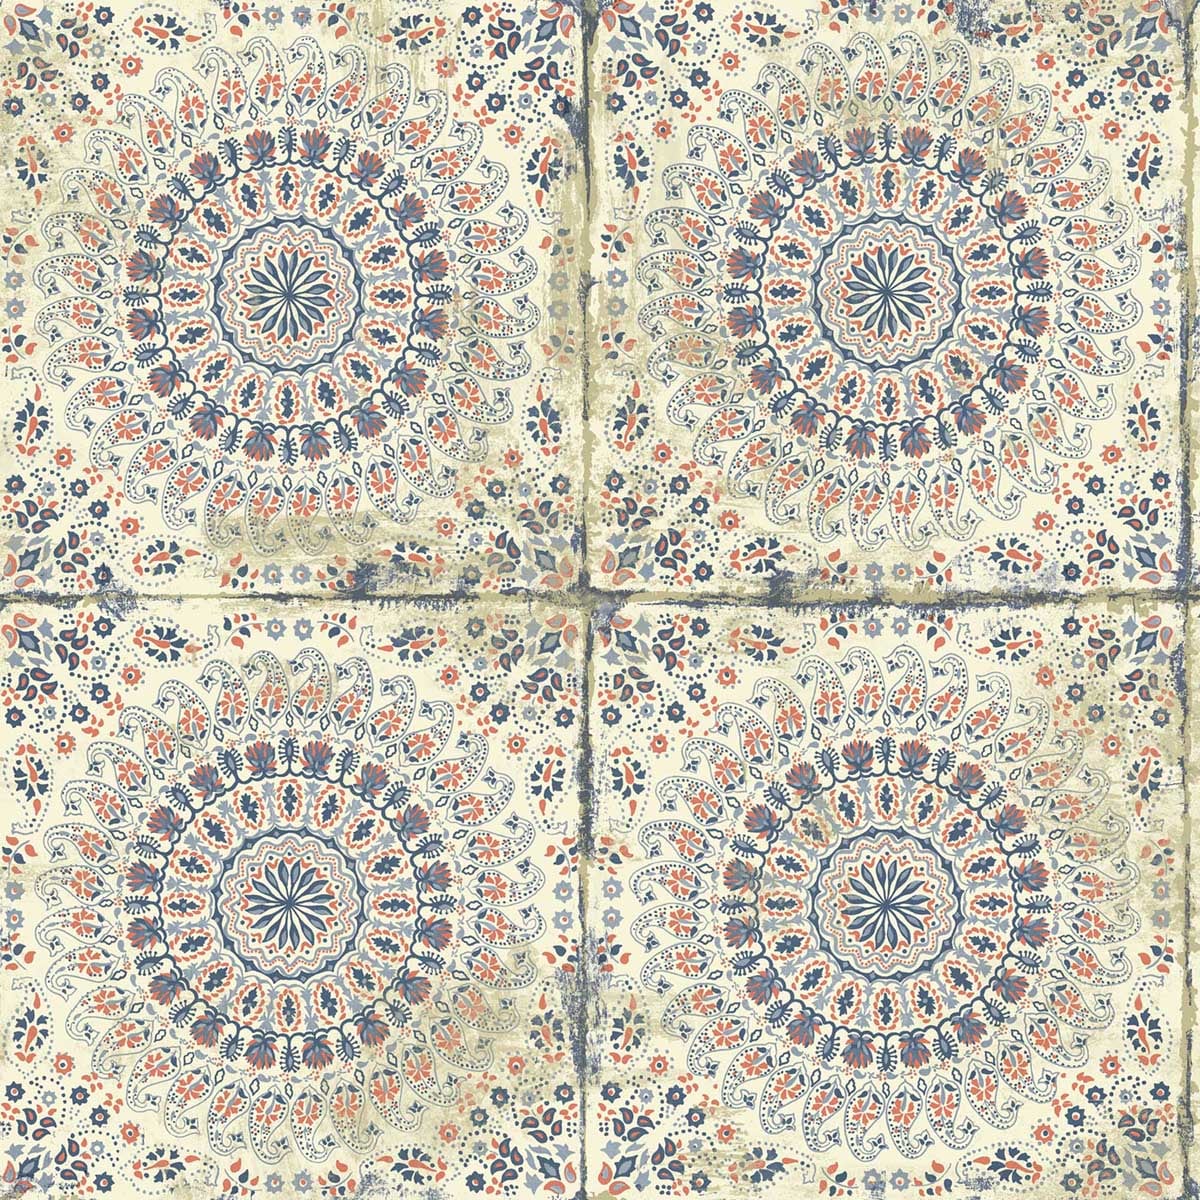 Seabrook Designs RY30706 Boho Rhapsody Mandala Boho Tile  Wallpaper Coral, Cream, and Midnight Blue